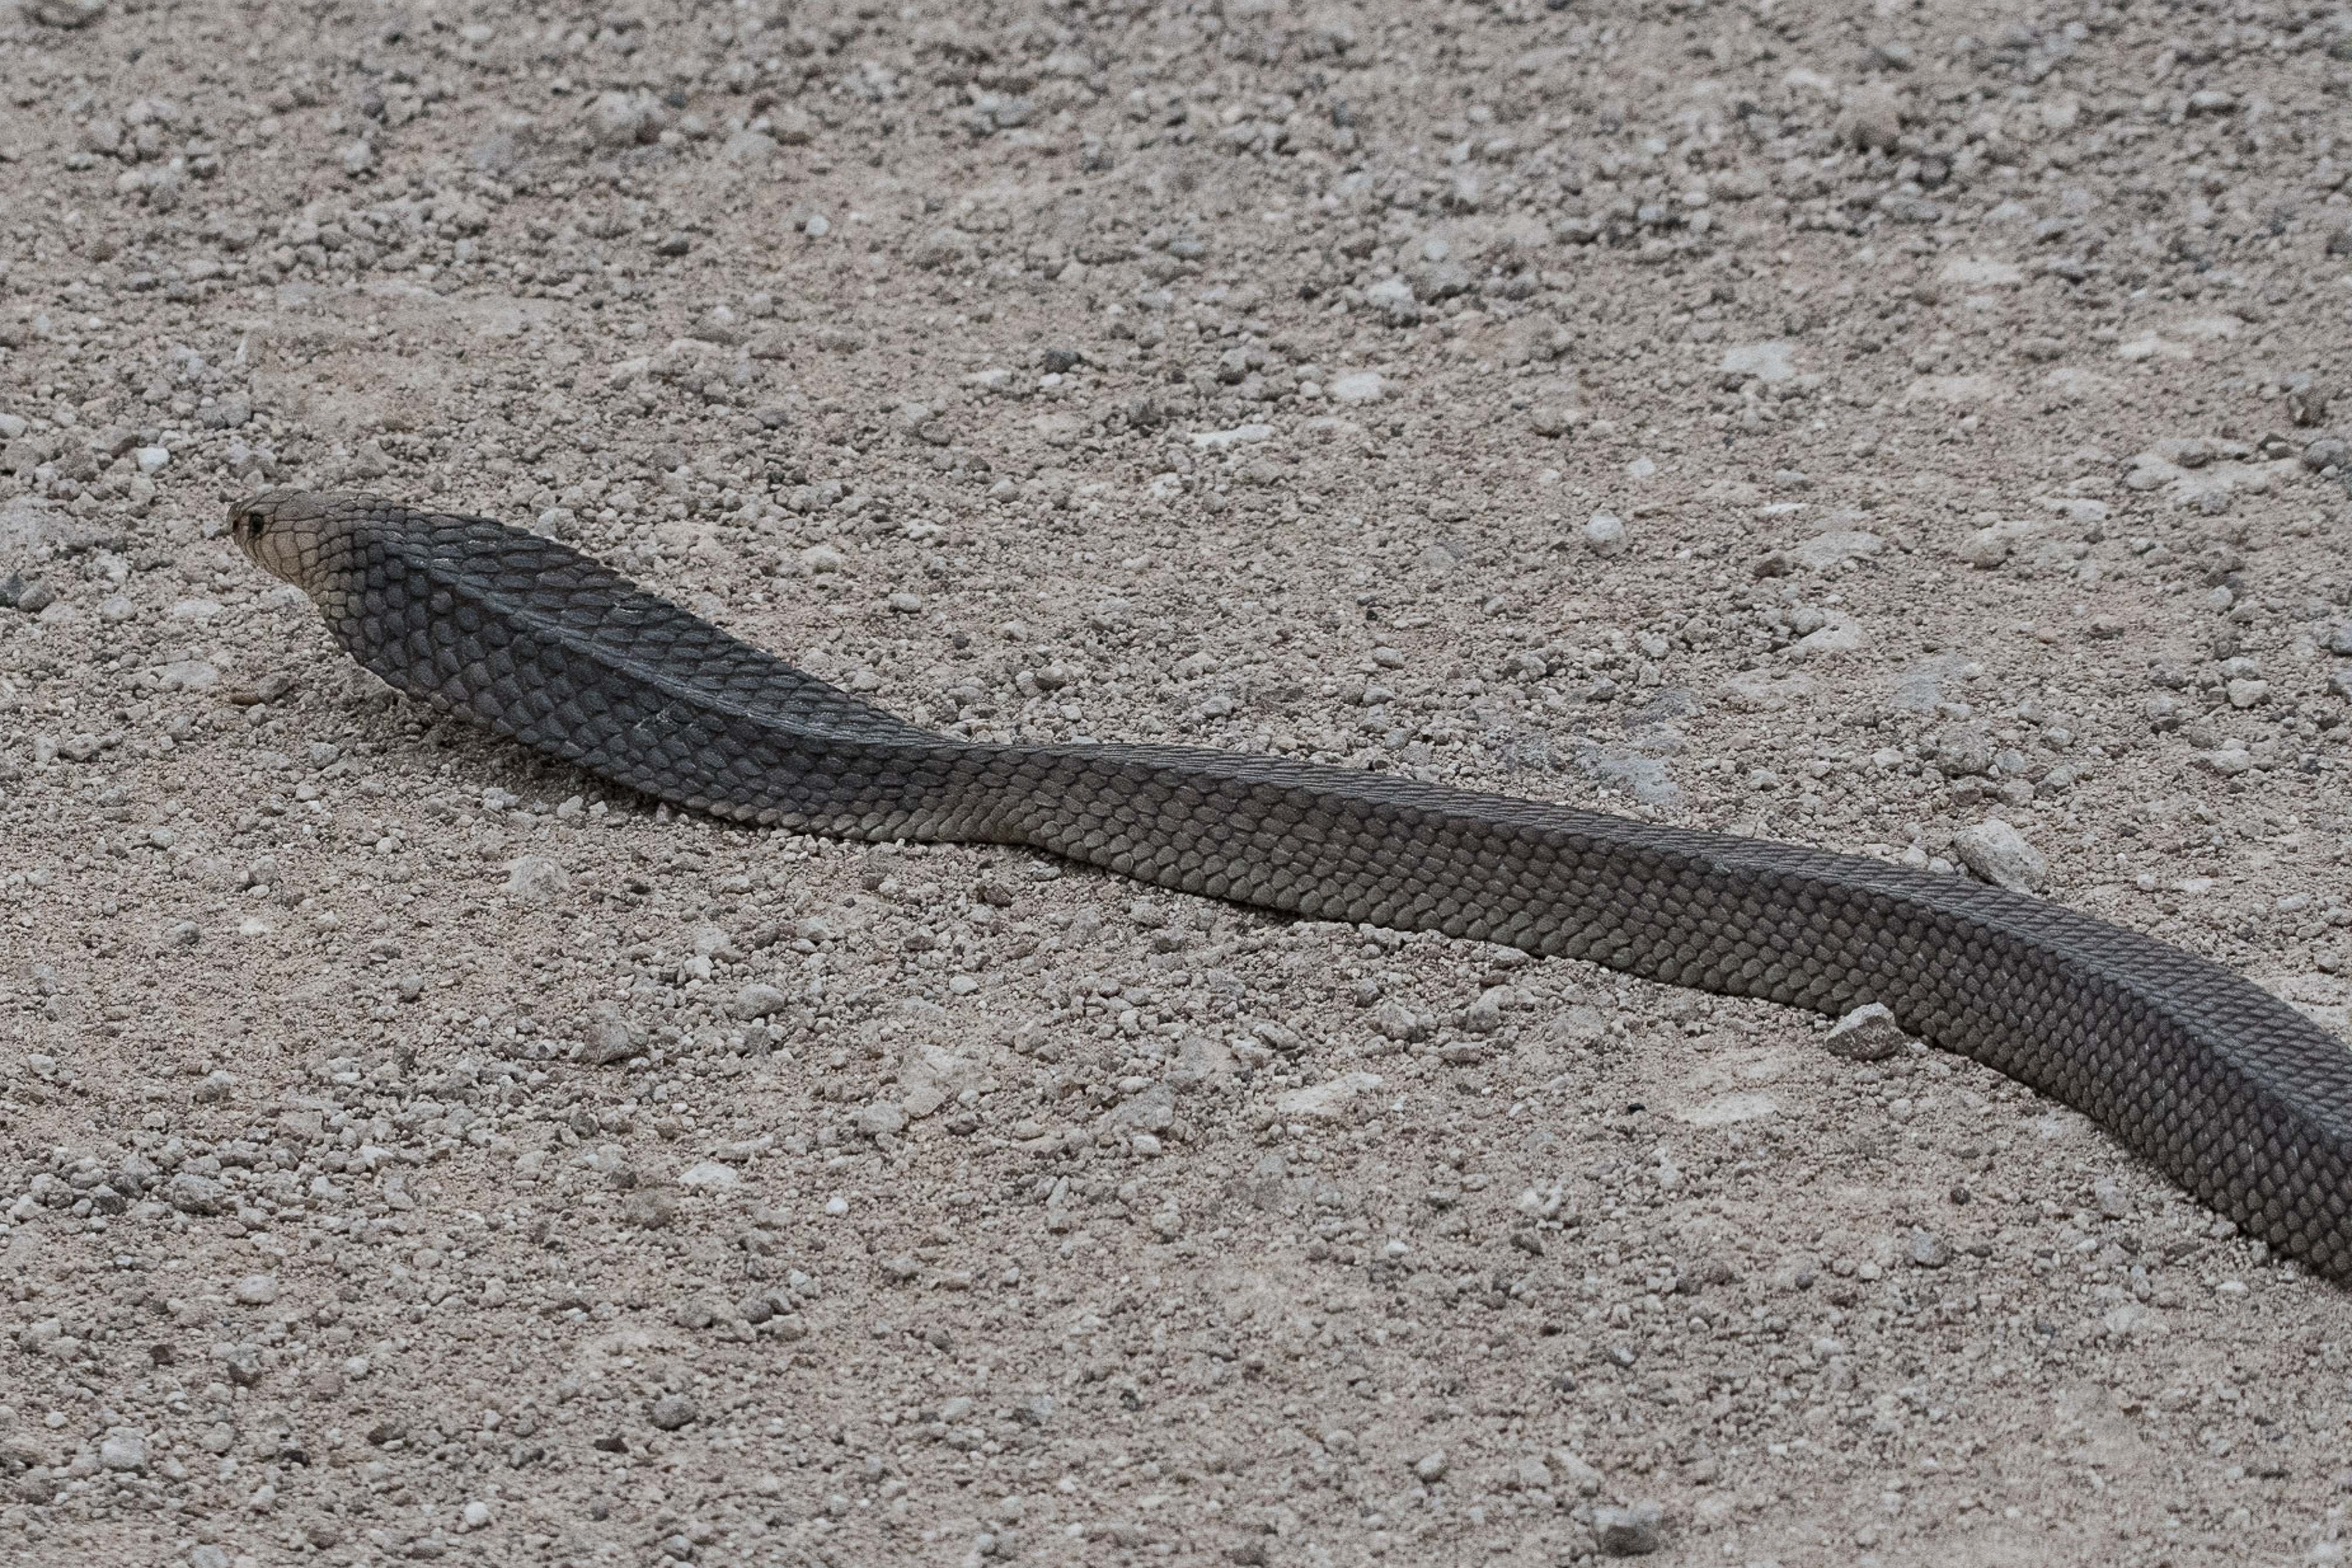 Cobra du Cap (Cape, ou Yellow cobra, Naja nivea), adulte traversant une piste du Parc National d'Etosha, Namibie.